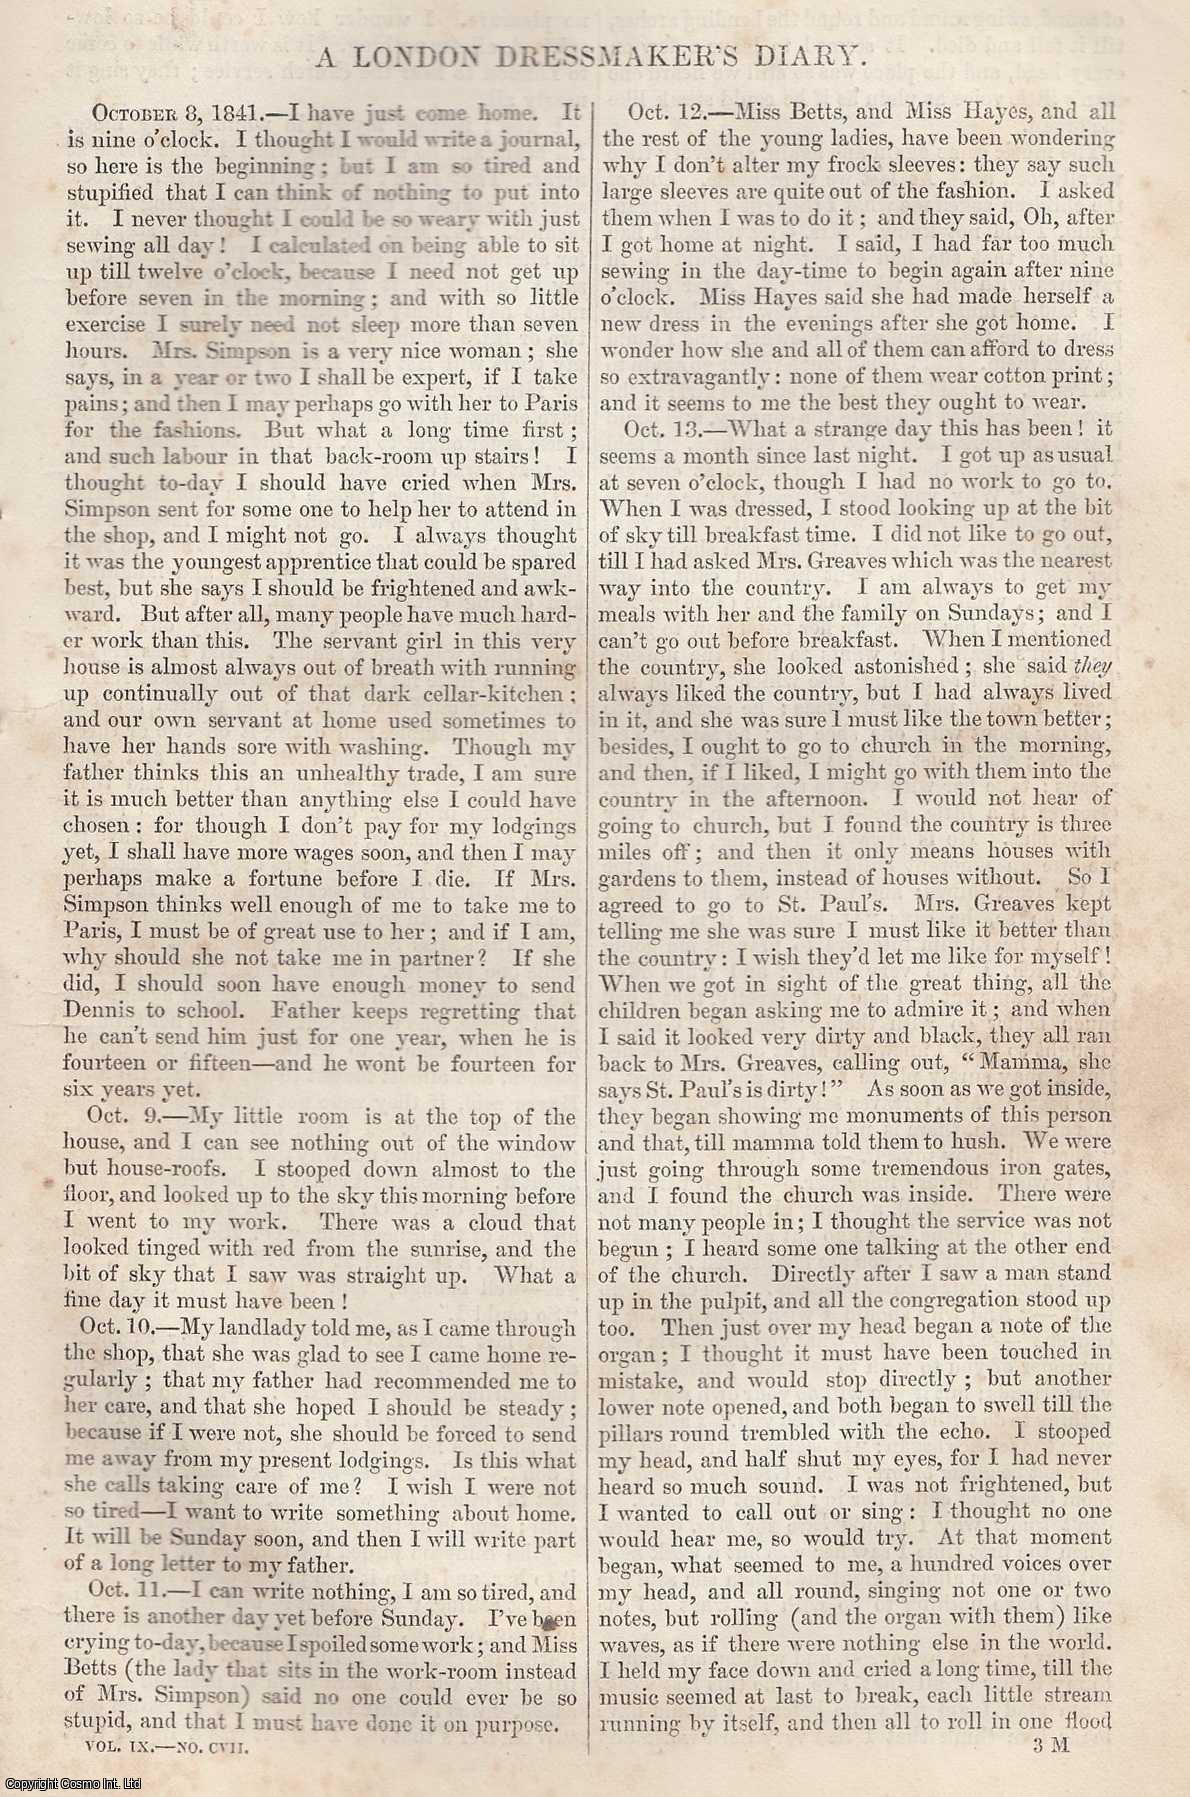 --- - A London Dressmaker's Diary. An original article from Tait's Edinburgh Magazine, 1842.